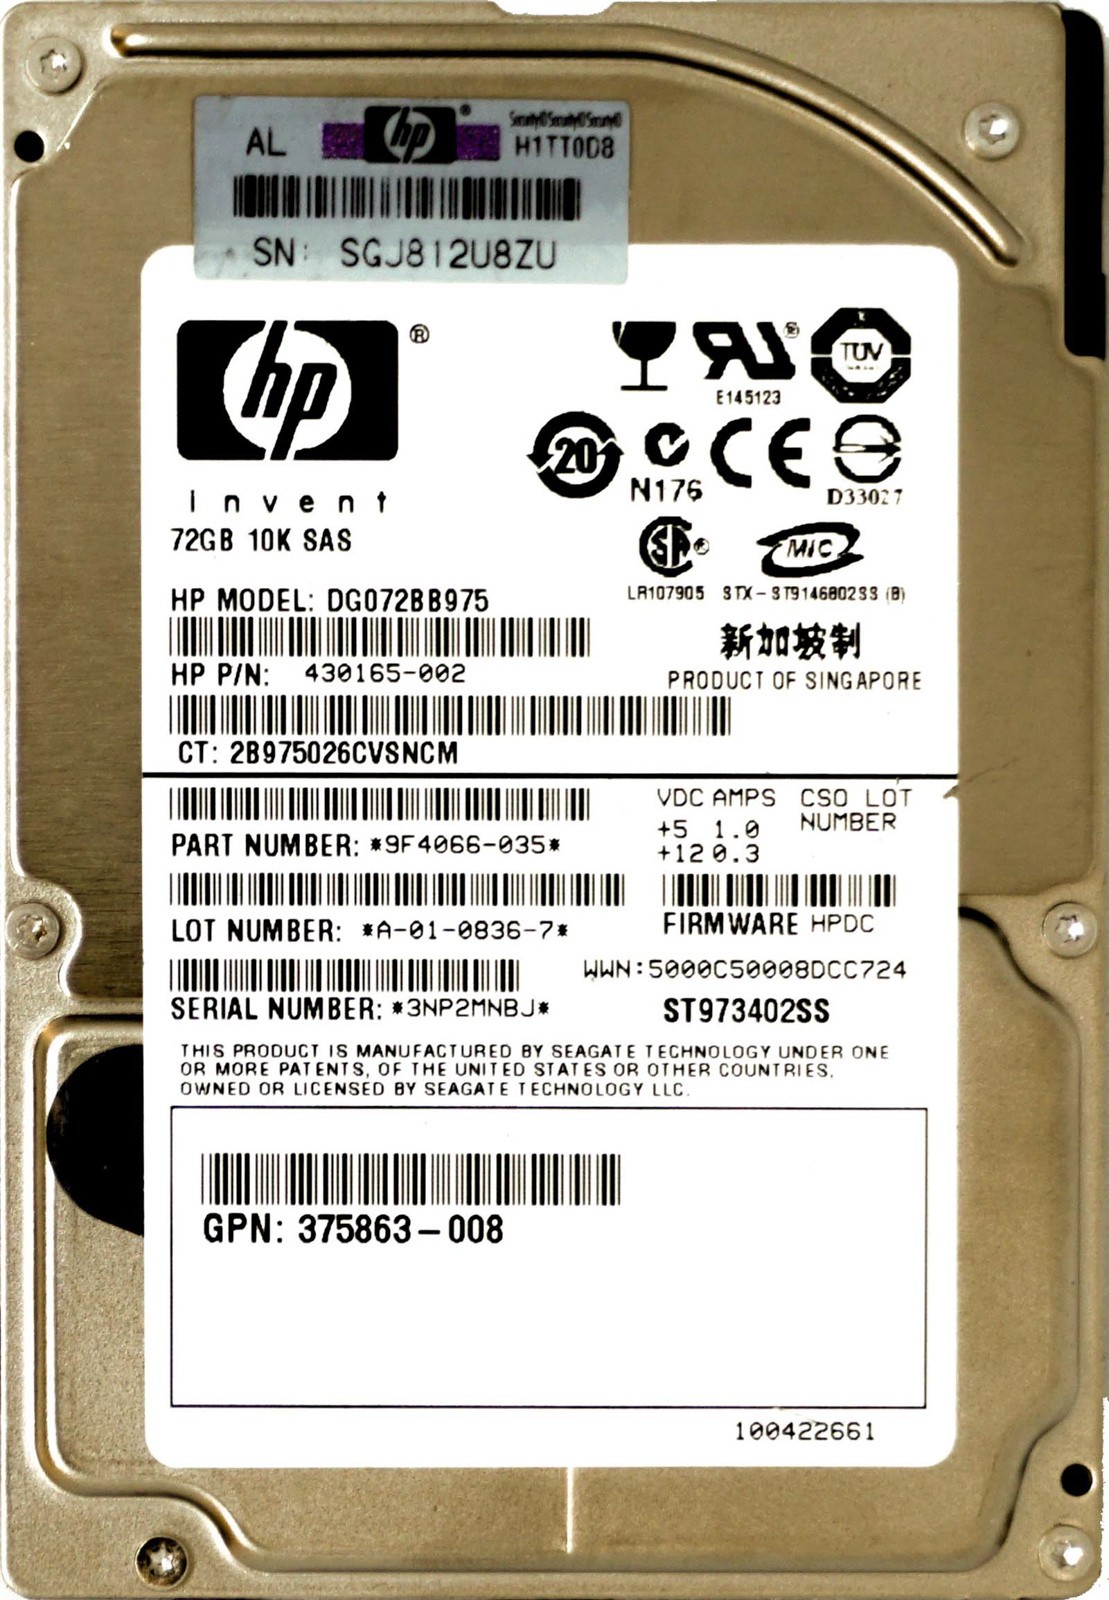 HP (430165-002) 72GB SAS-1 (SFF) 3Gb/s 10K HDD